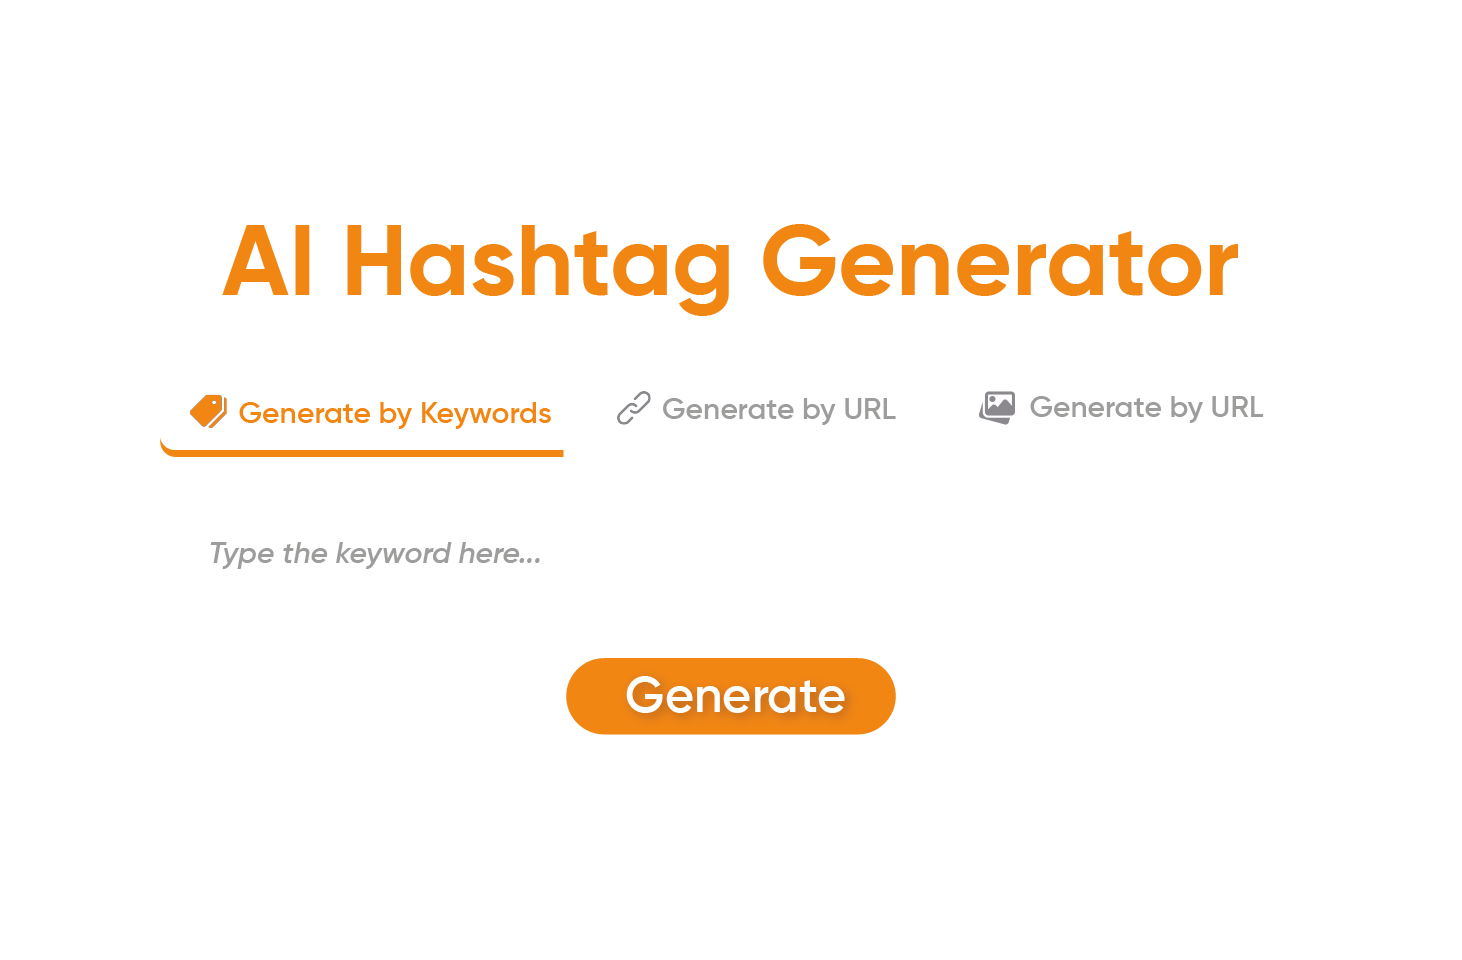 Why Use AI Get Hashtags Tool?